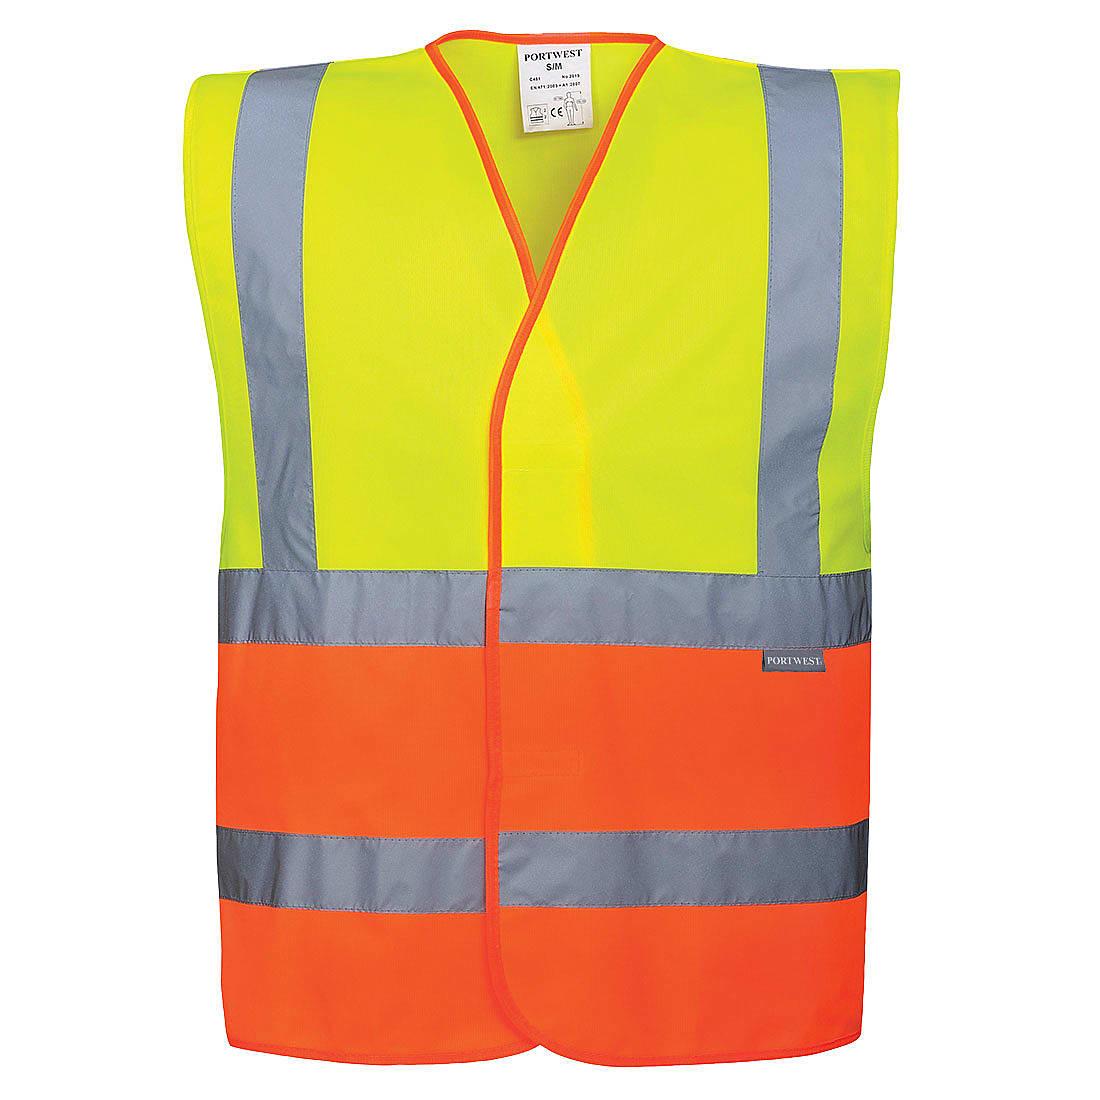 Portwest Two Tone Hi-Viz Vest in Yellow / Orange (Product Code: C481)